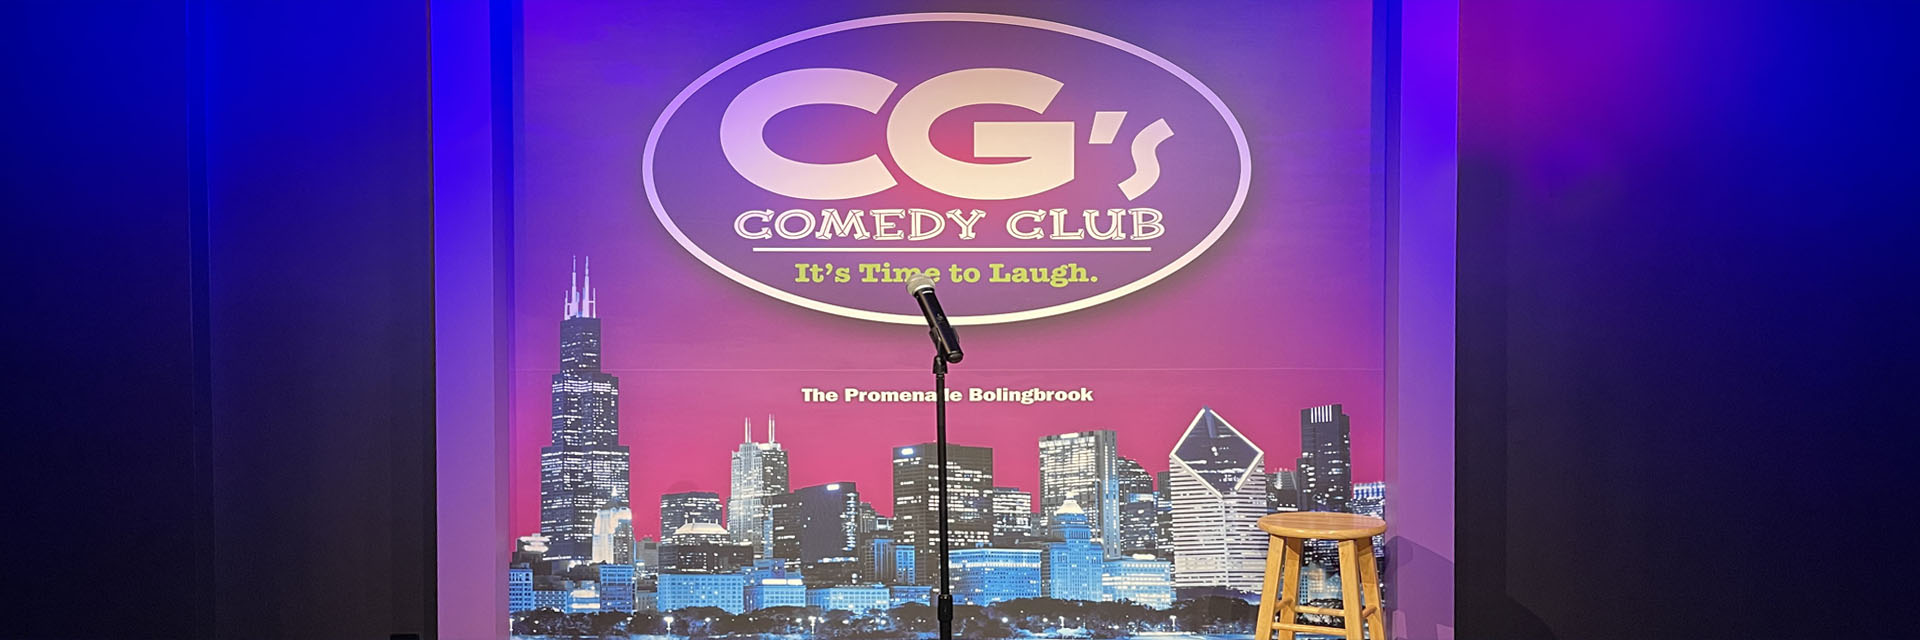 Cgs comedy club